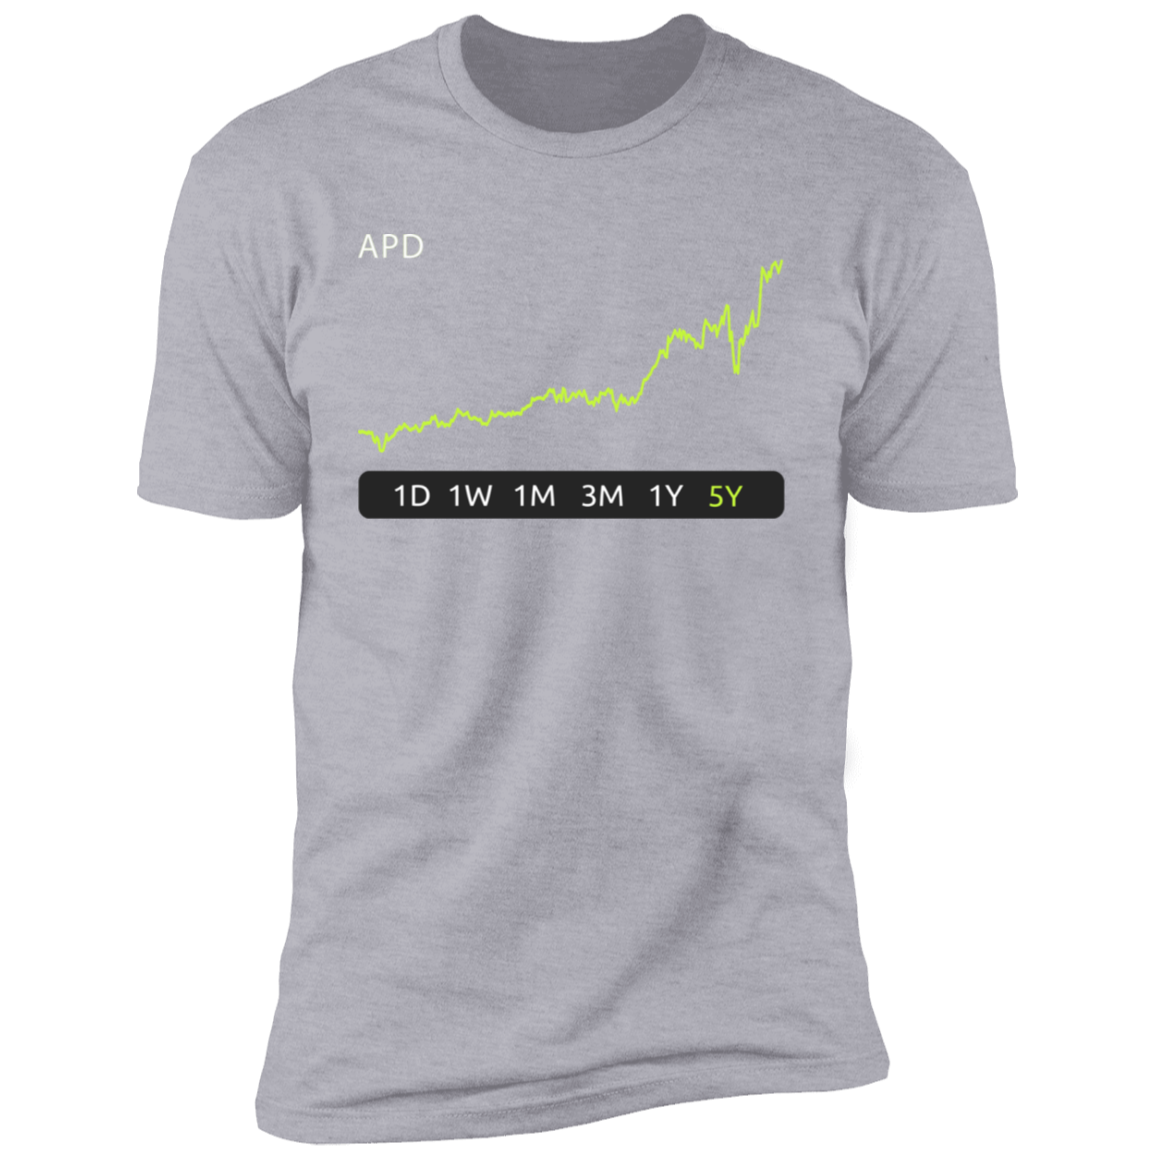 APD Stock 5y Premium T-Shirt